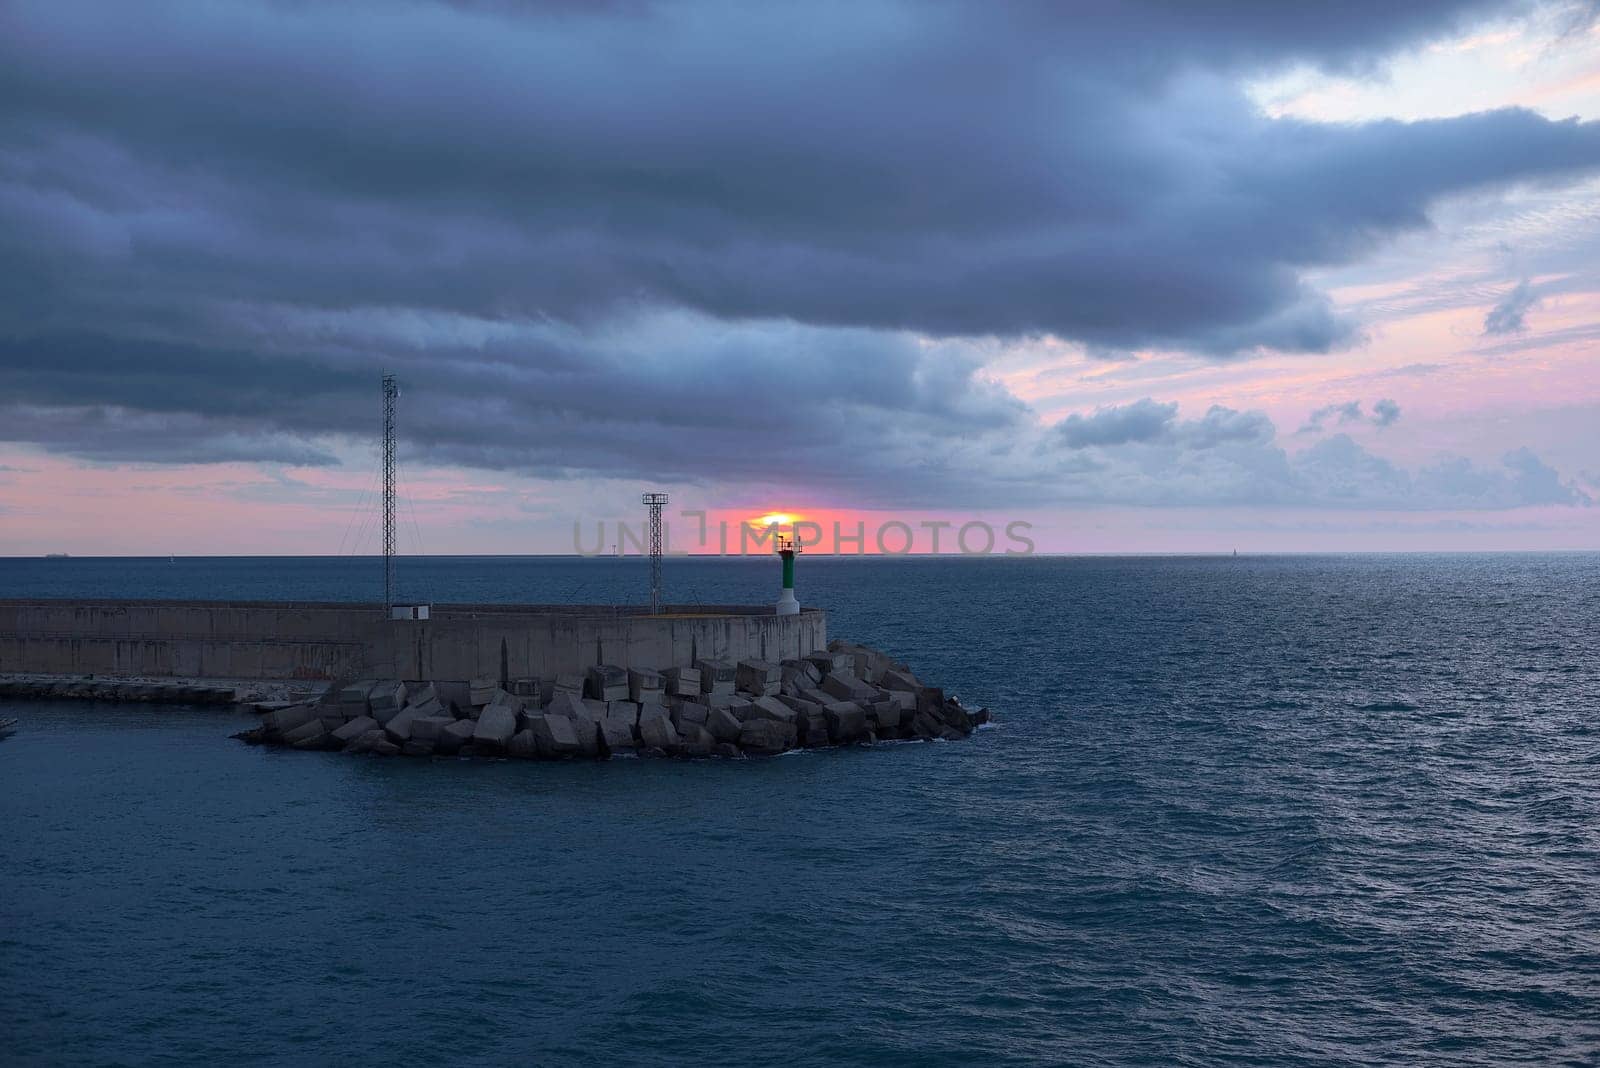 Sunrise from green lighthouse on maritime breakwater by raul_ruiz